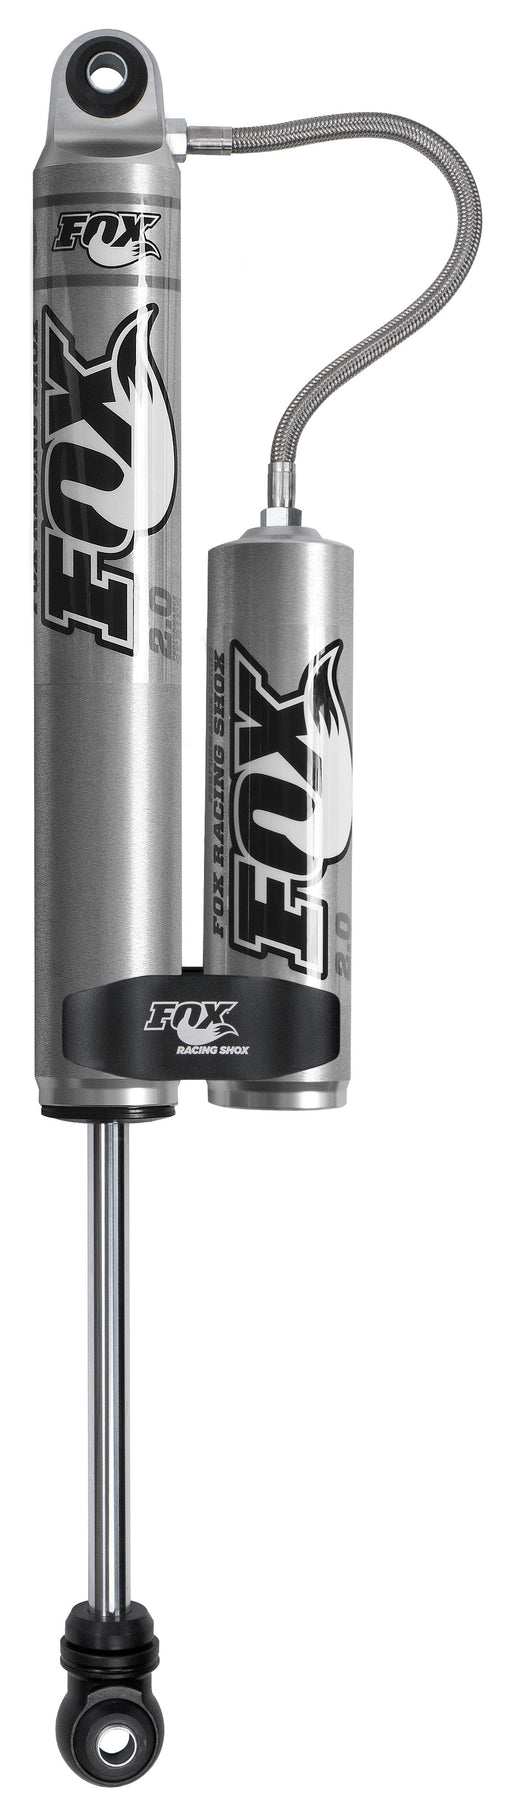 Fox Racing Shox 985-24-026 Performance Series Shock Absorber